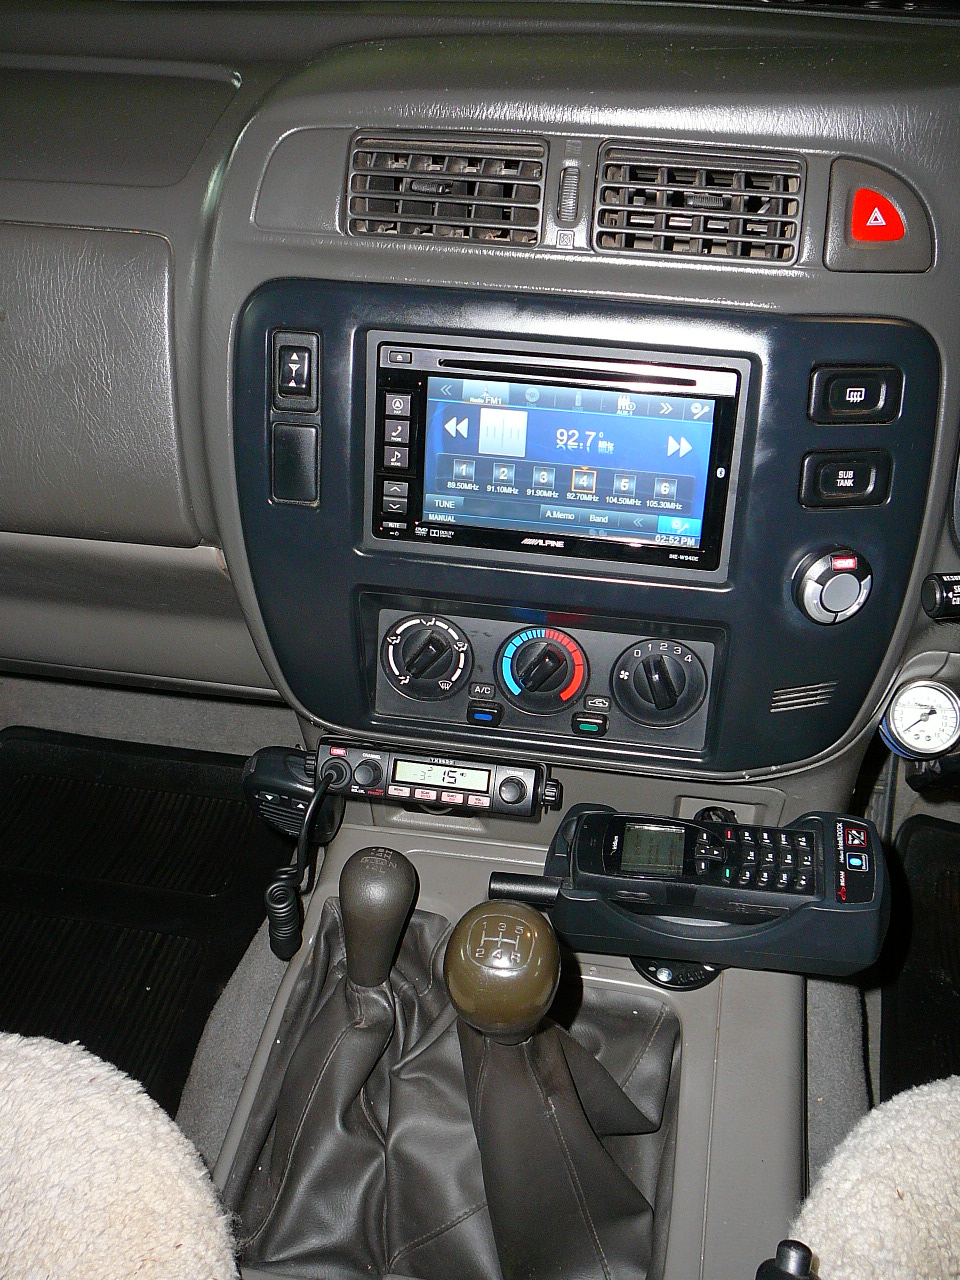 Nissan Patrol, Alpine GPS Navigation System Installation